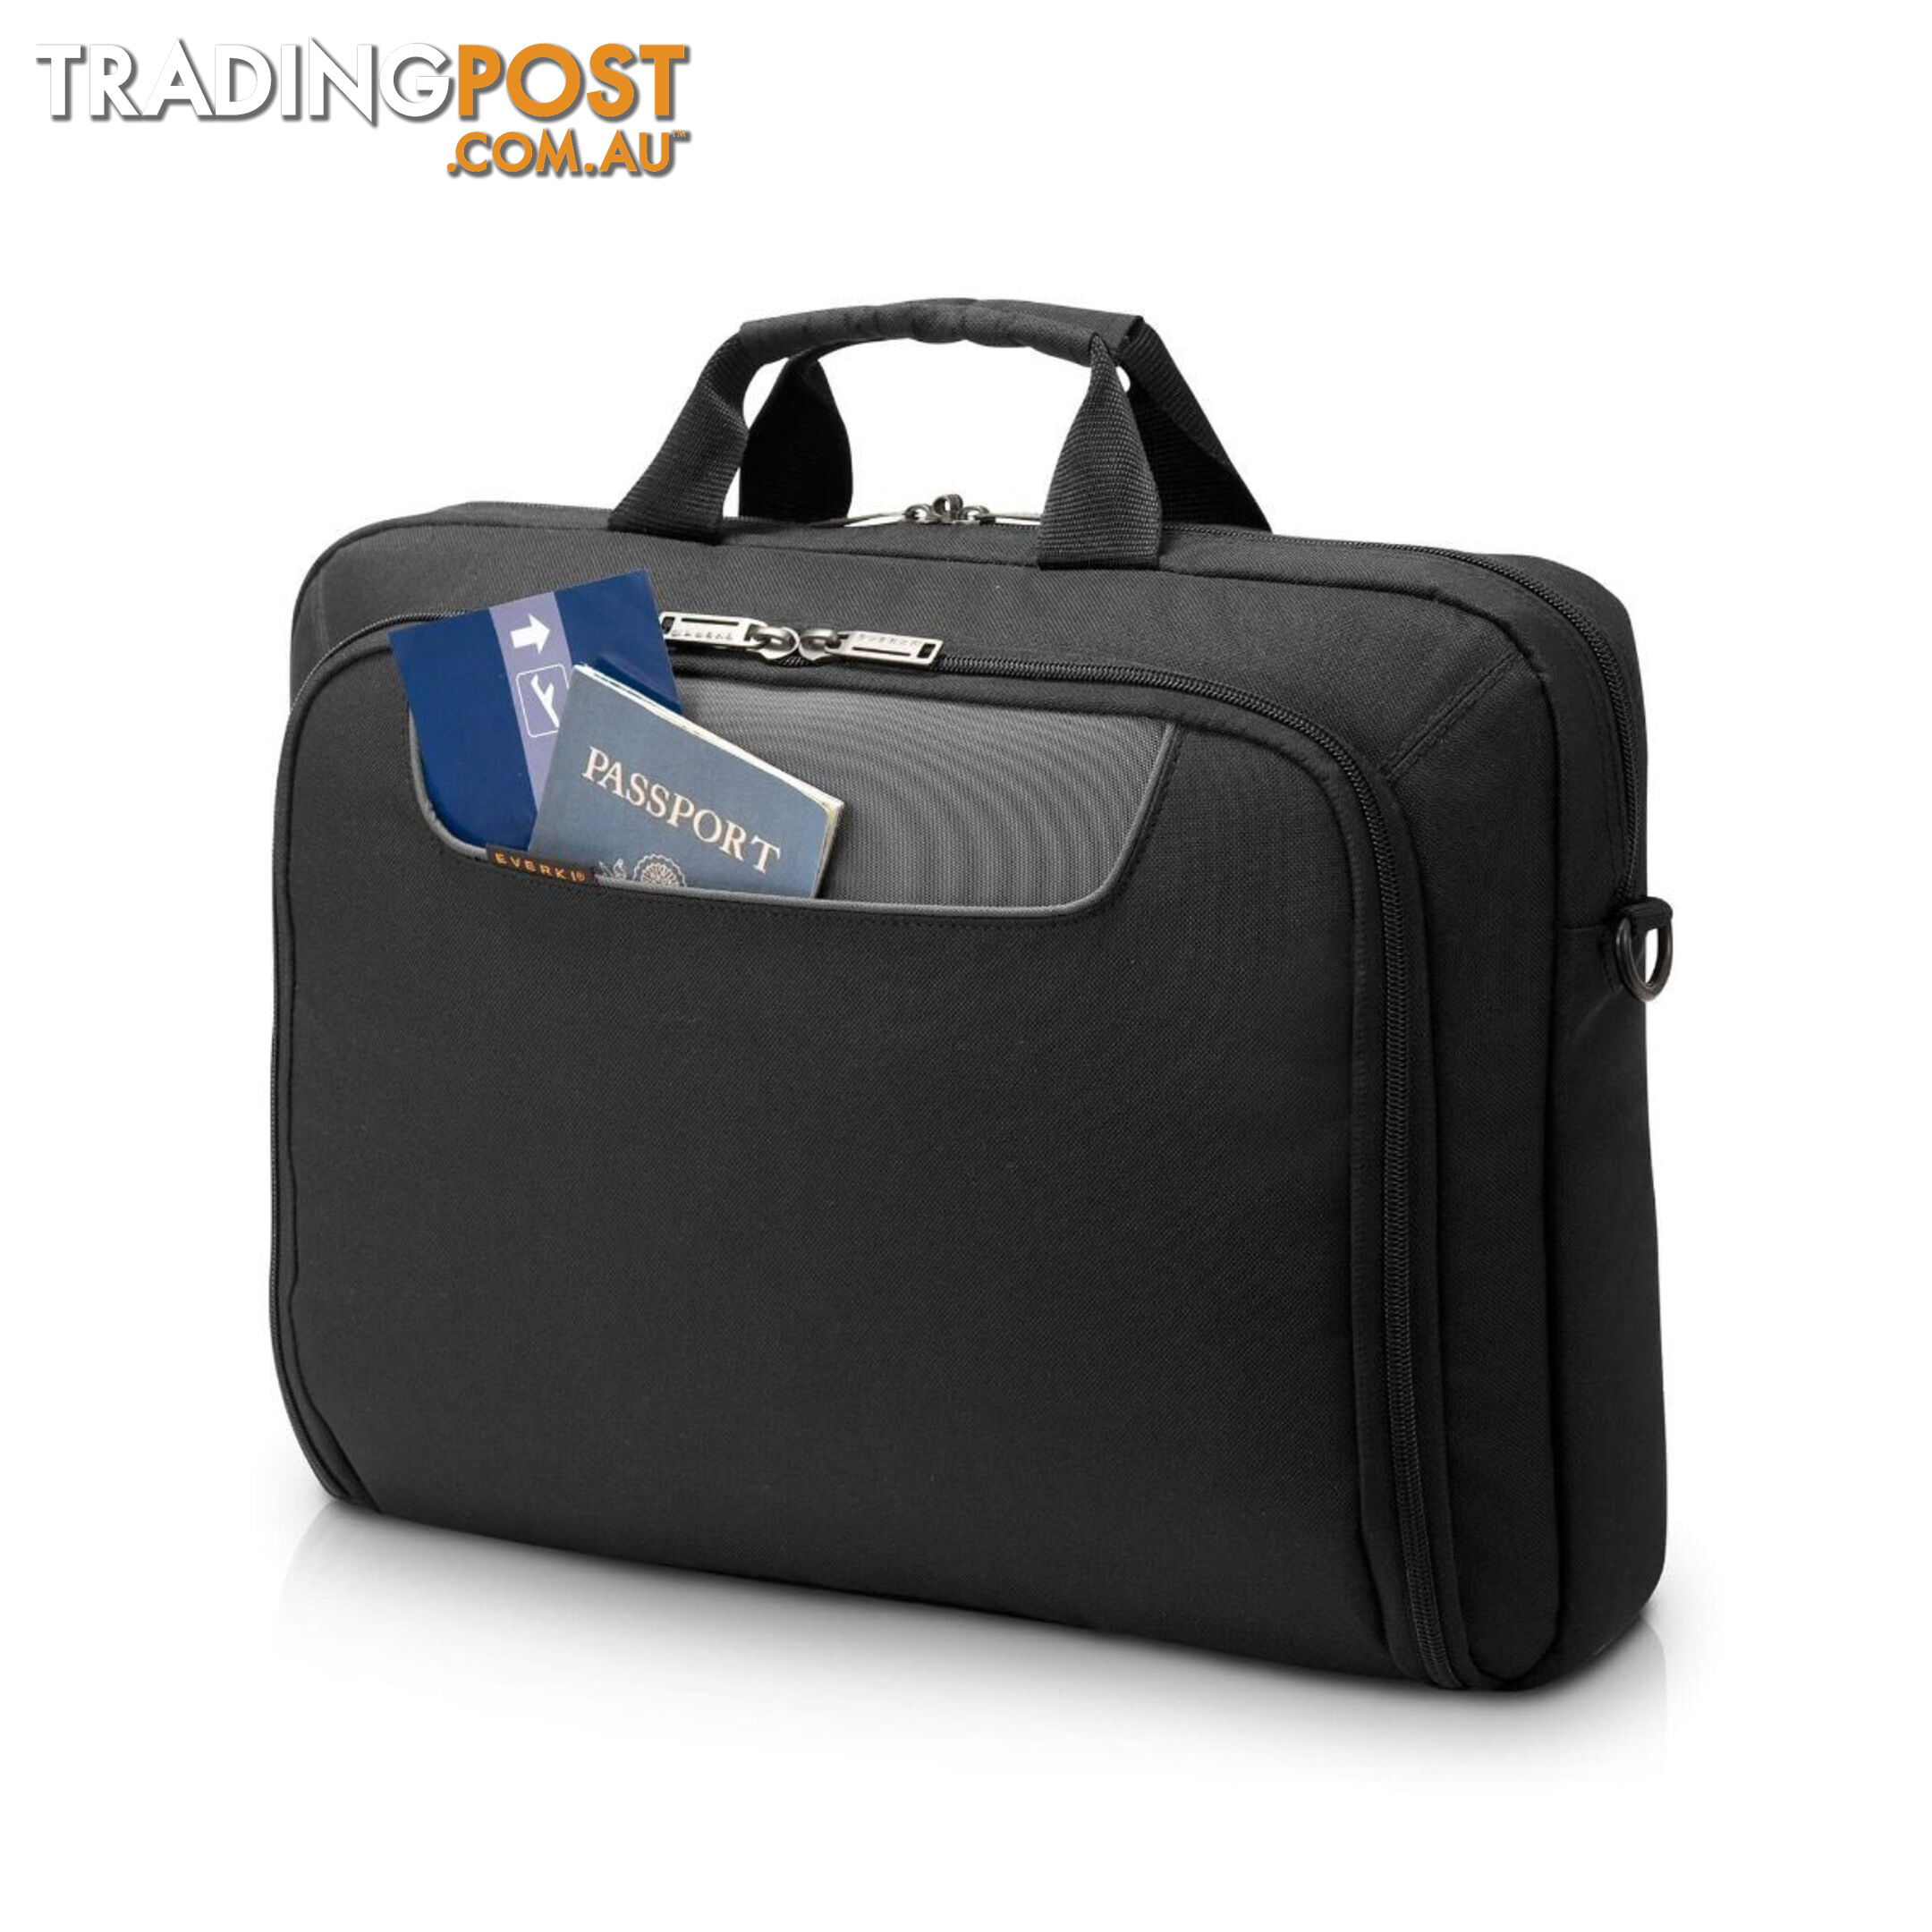 Everki Advance Laptop Bag Briefcase 16" EKB407NCH